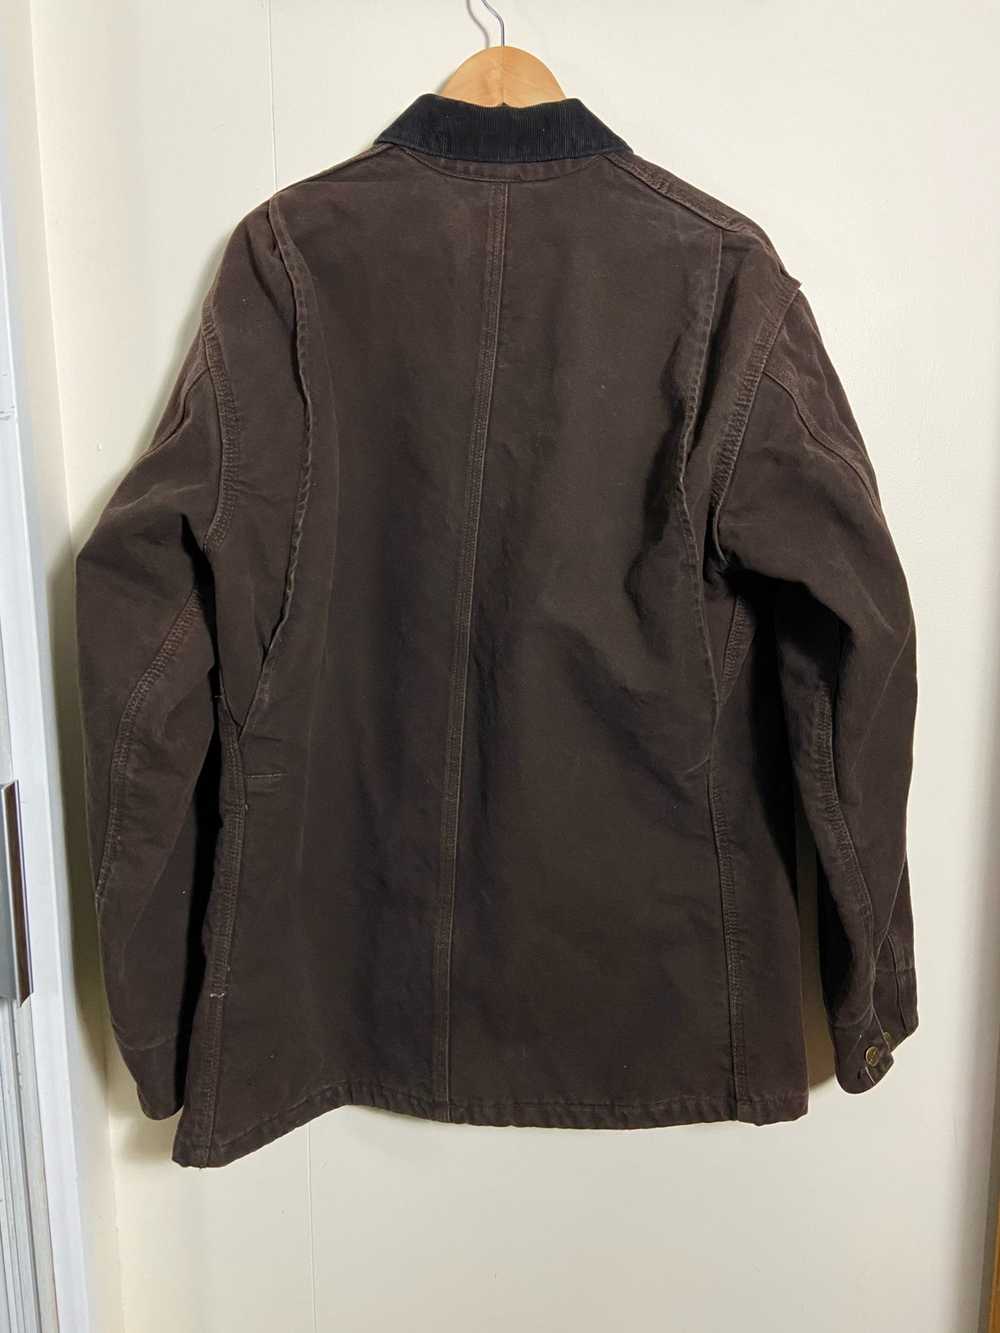 Carhartt × Vintage Carhartt Chore coat jacket - image 2